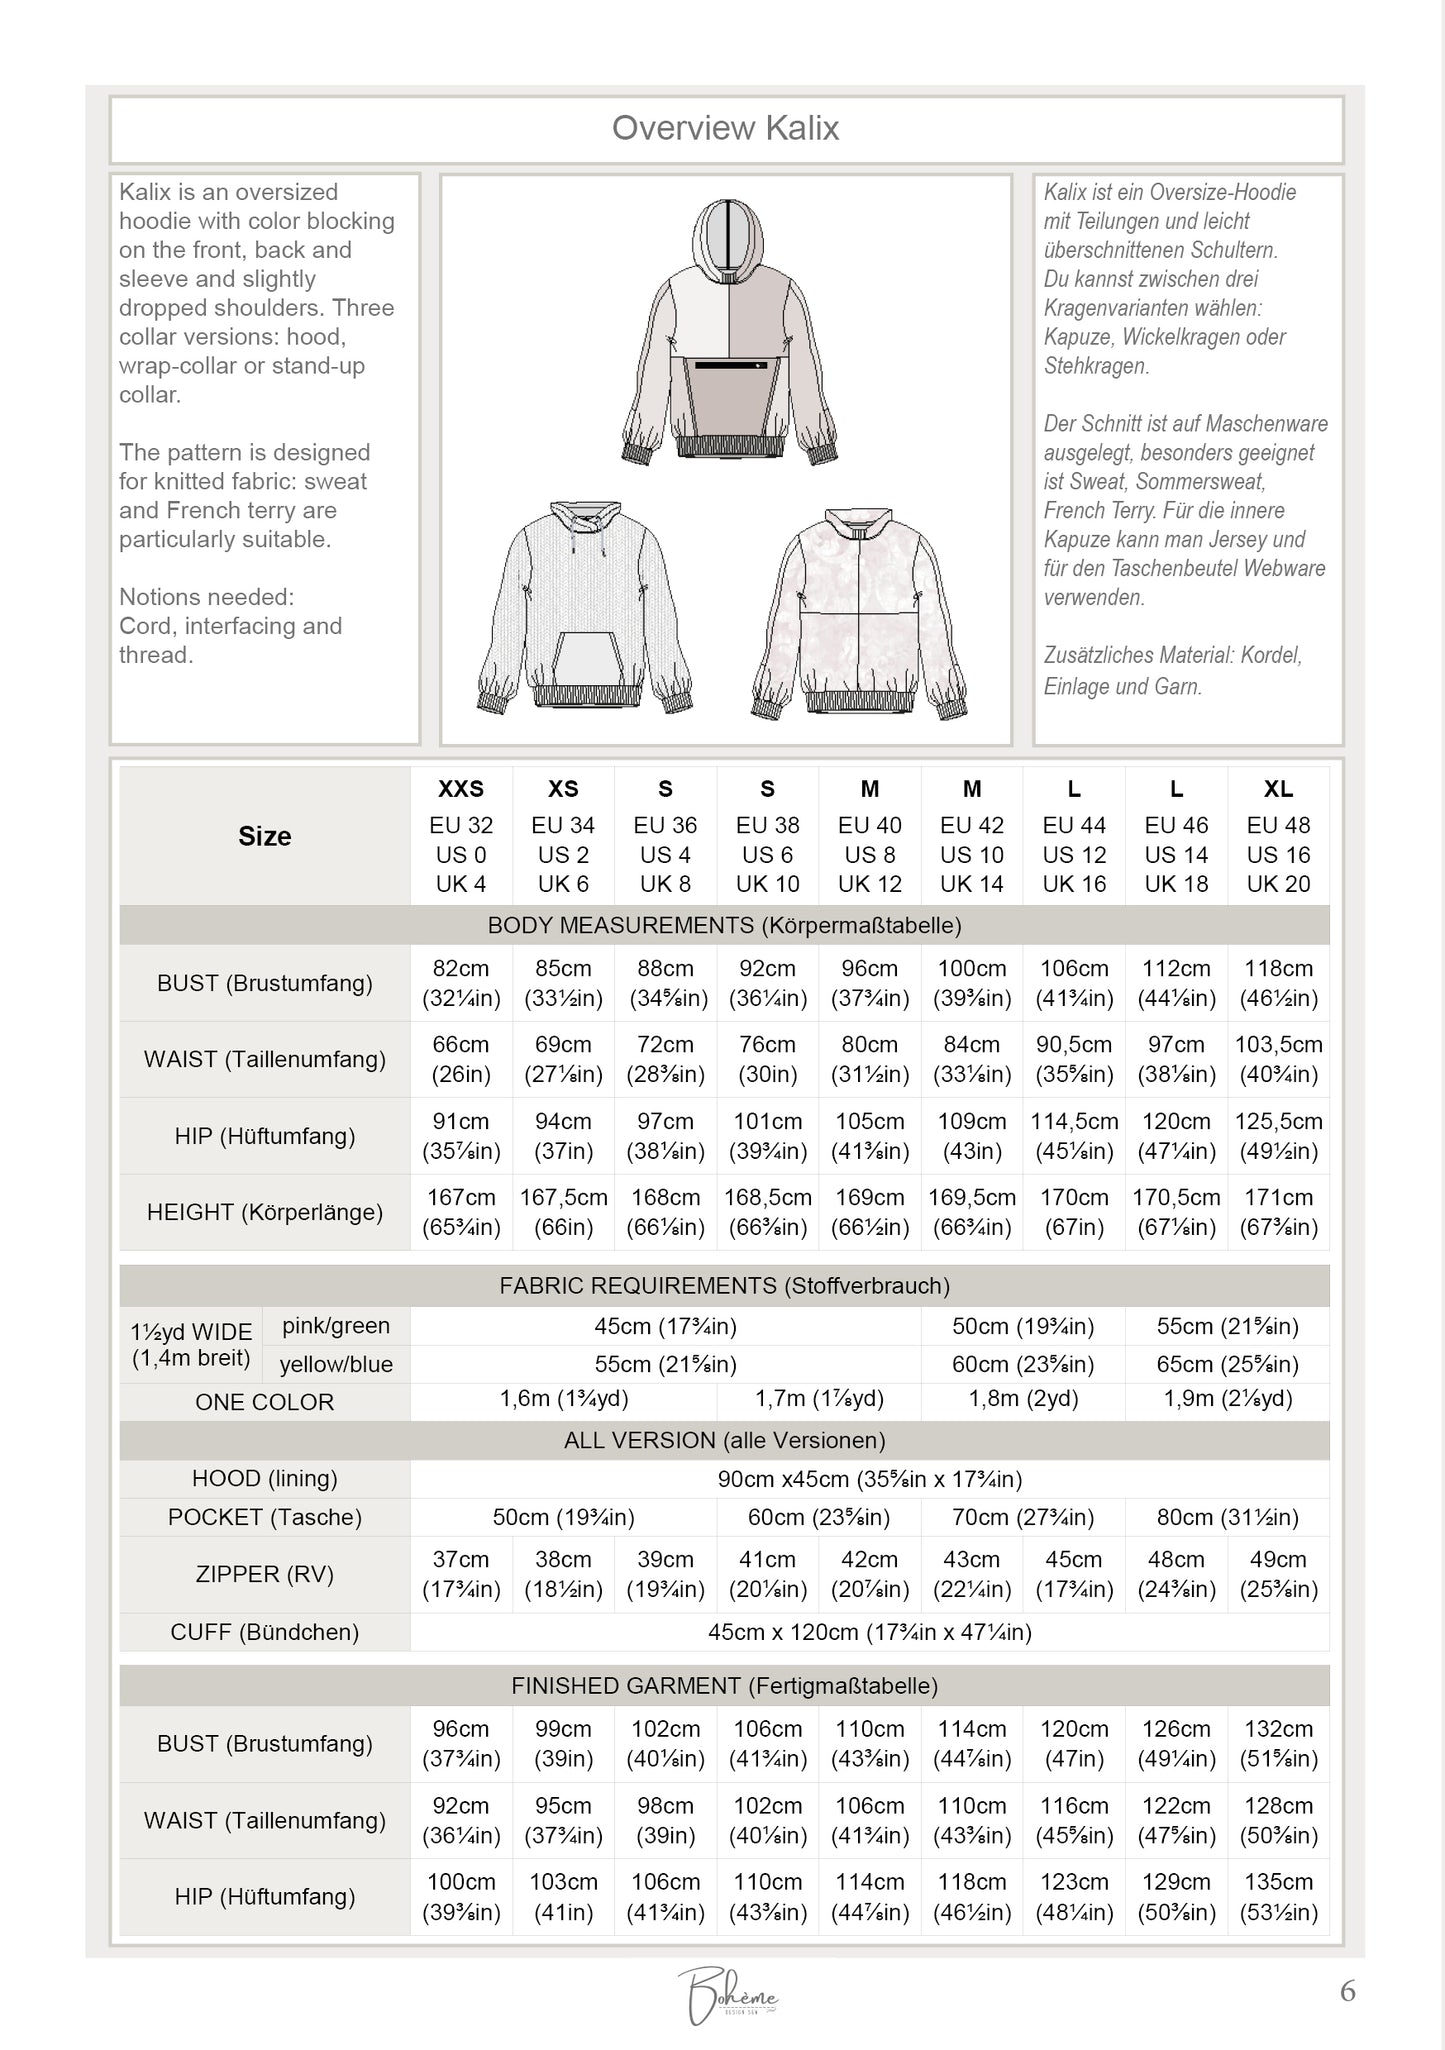 Hoodie | Kalix W1409 | Woman XXS - XL | Digital Sewing Pattern | PDF | Projector | Bohème | Pullover | Sweater | Color Blocking